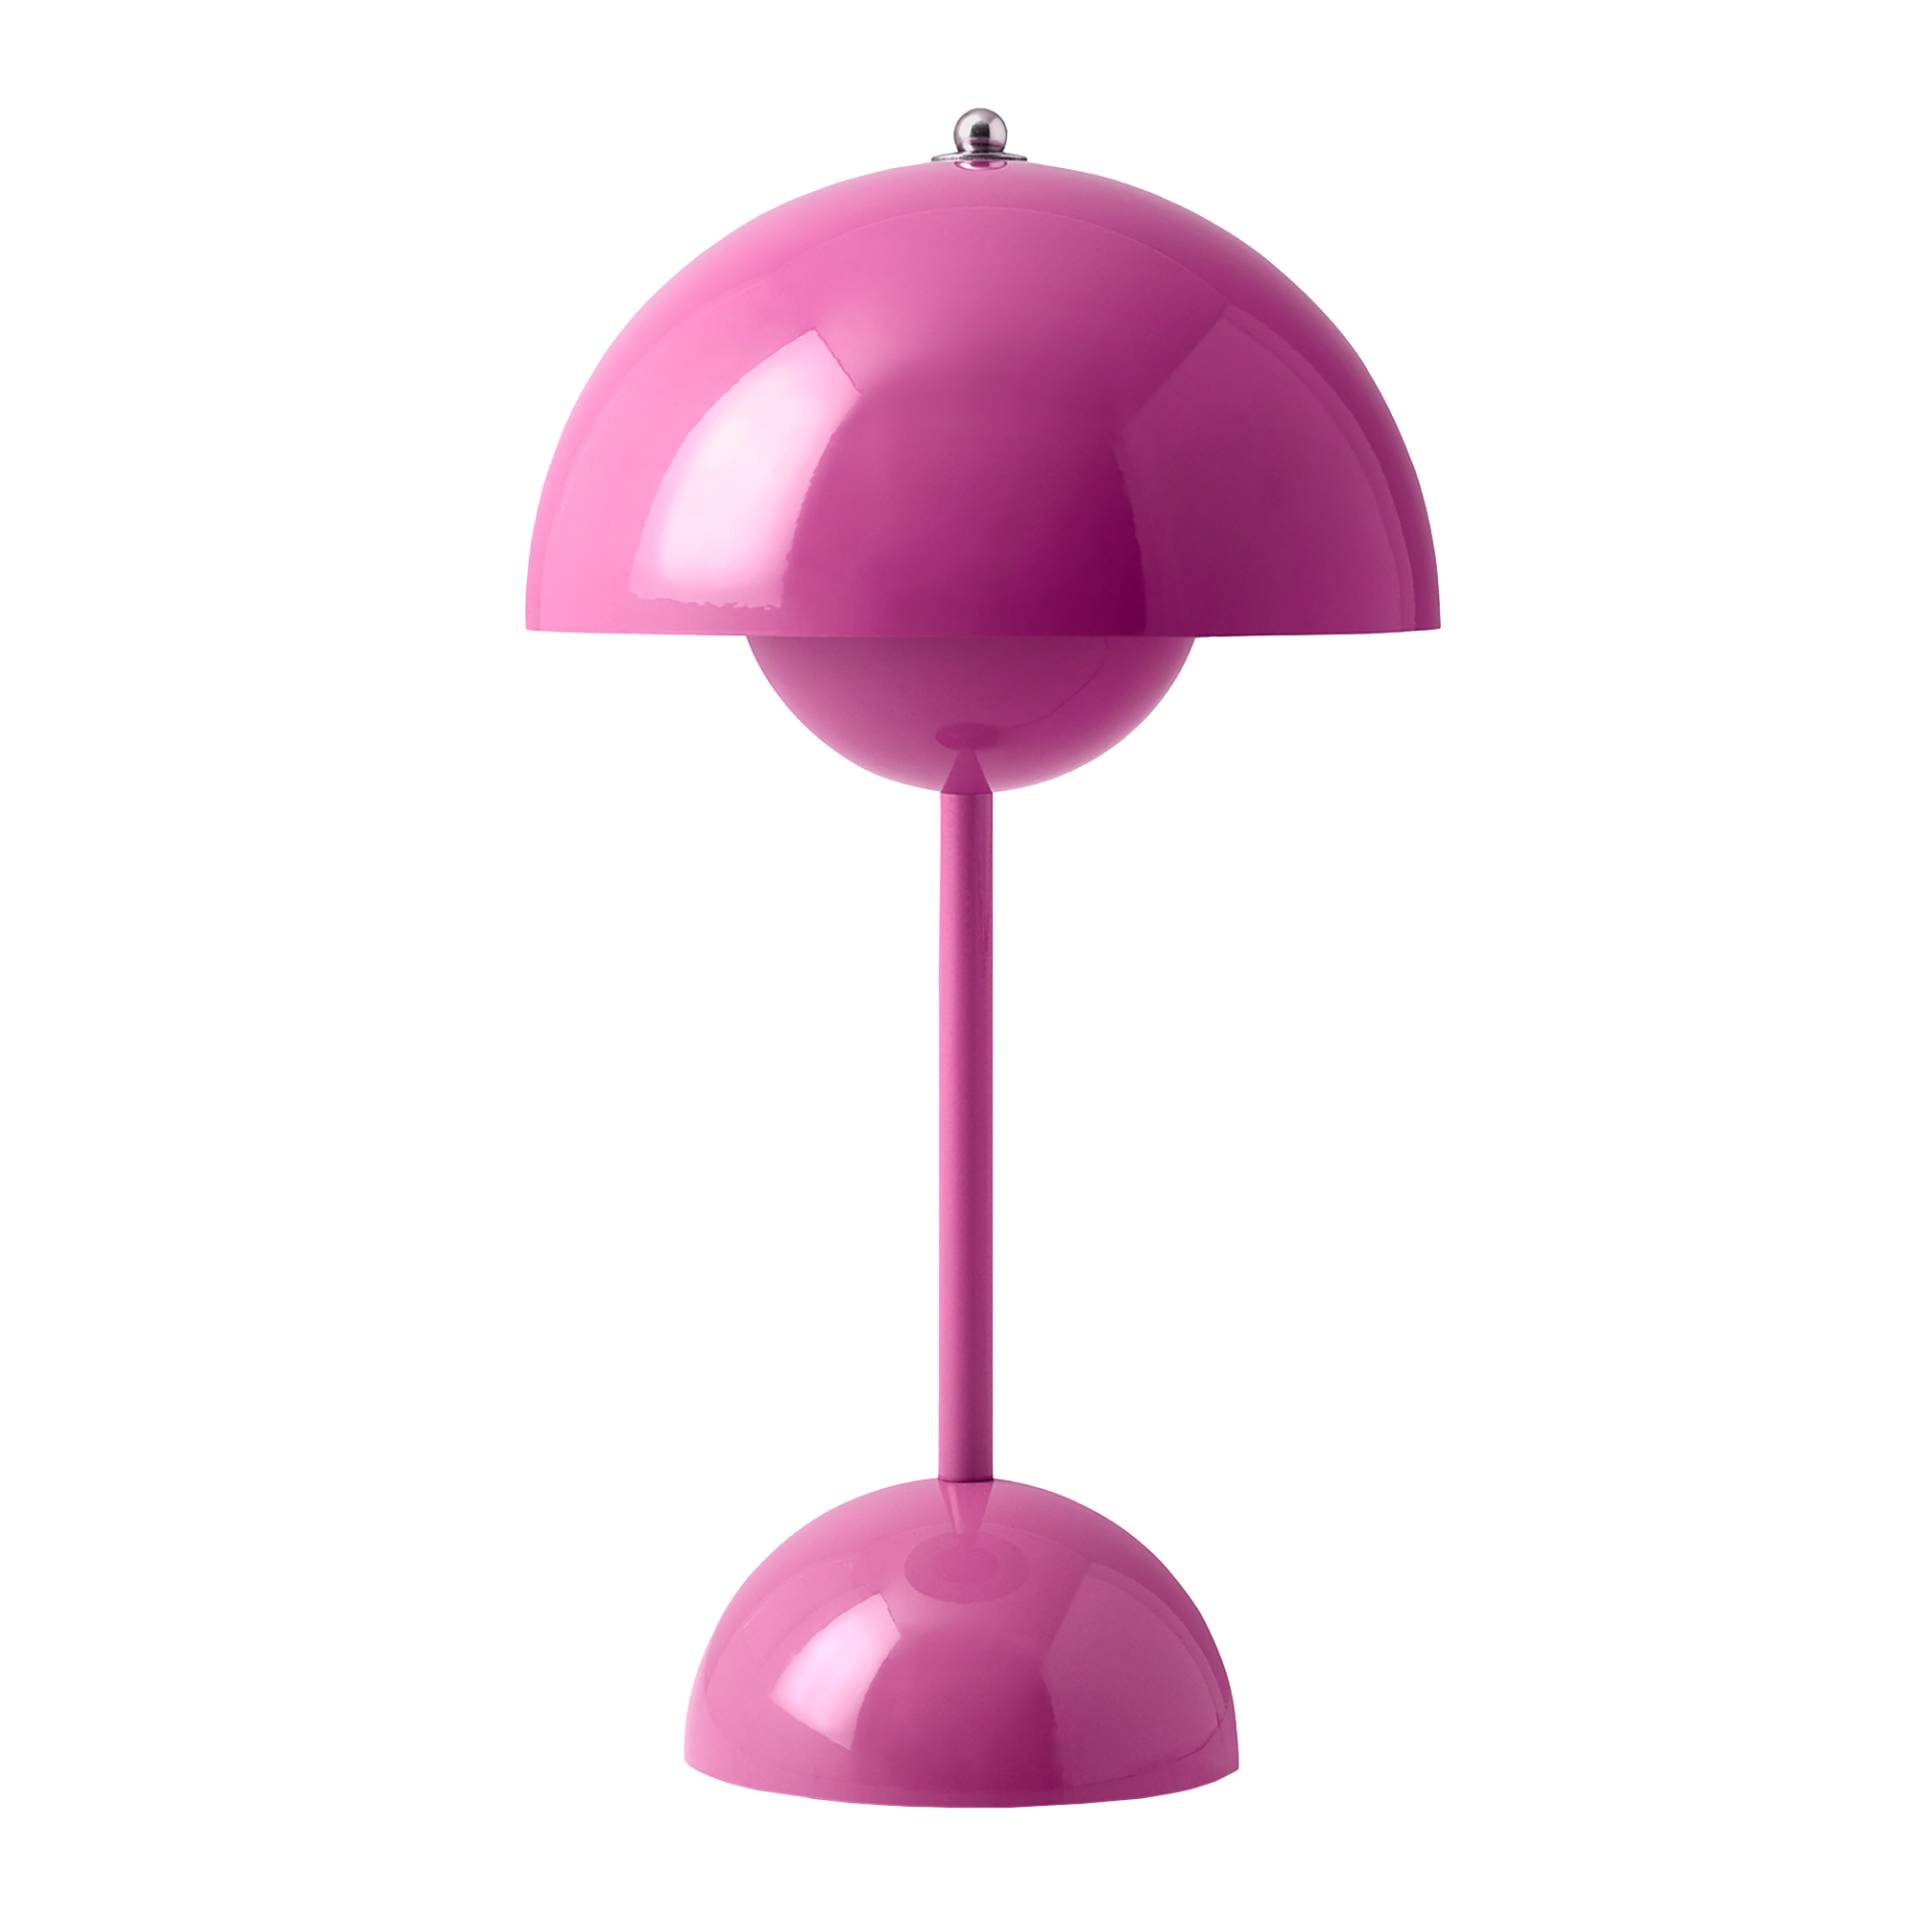 &Tradition - Flowerpot VP9 LED Akkuleuchte mit magnetischem Ladekabel - tangy pink/glänzend/H x Ø 29,5x16cm/LED 3W/2700K/104lm/CRI>90/dimmbar via Touc von &Tradition